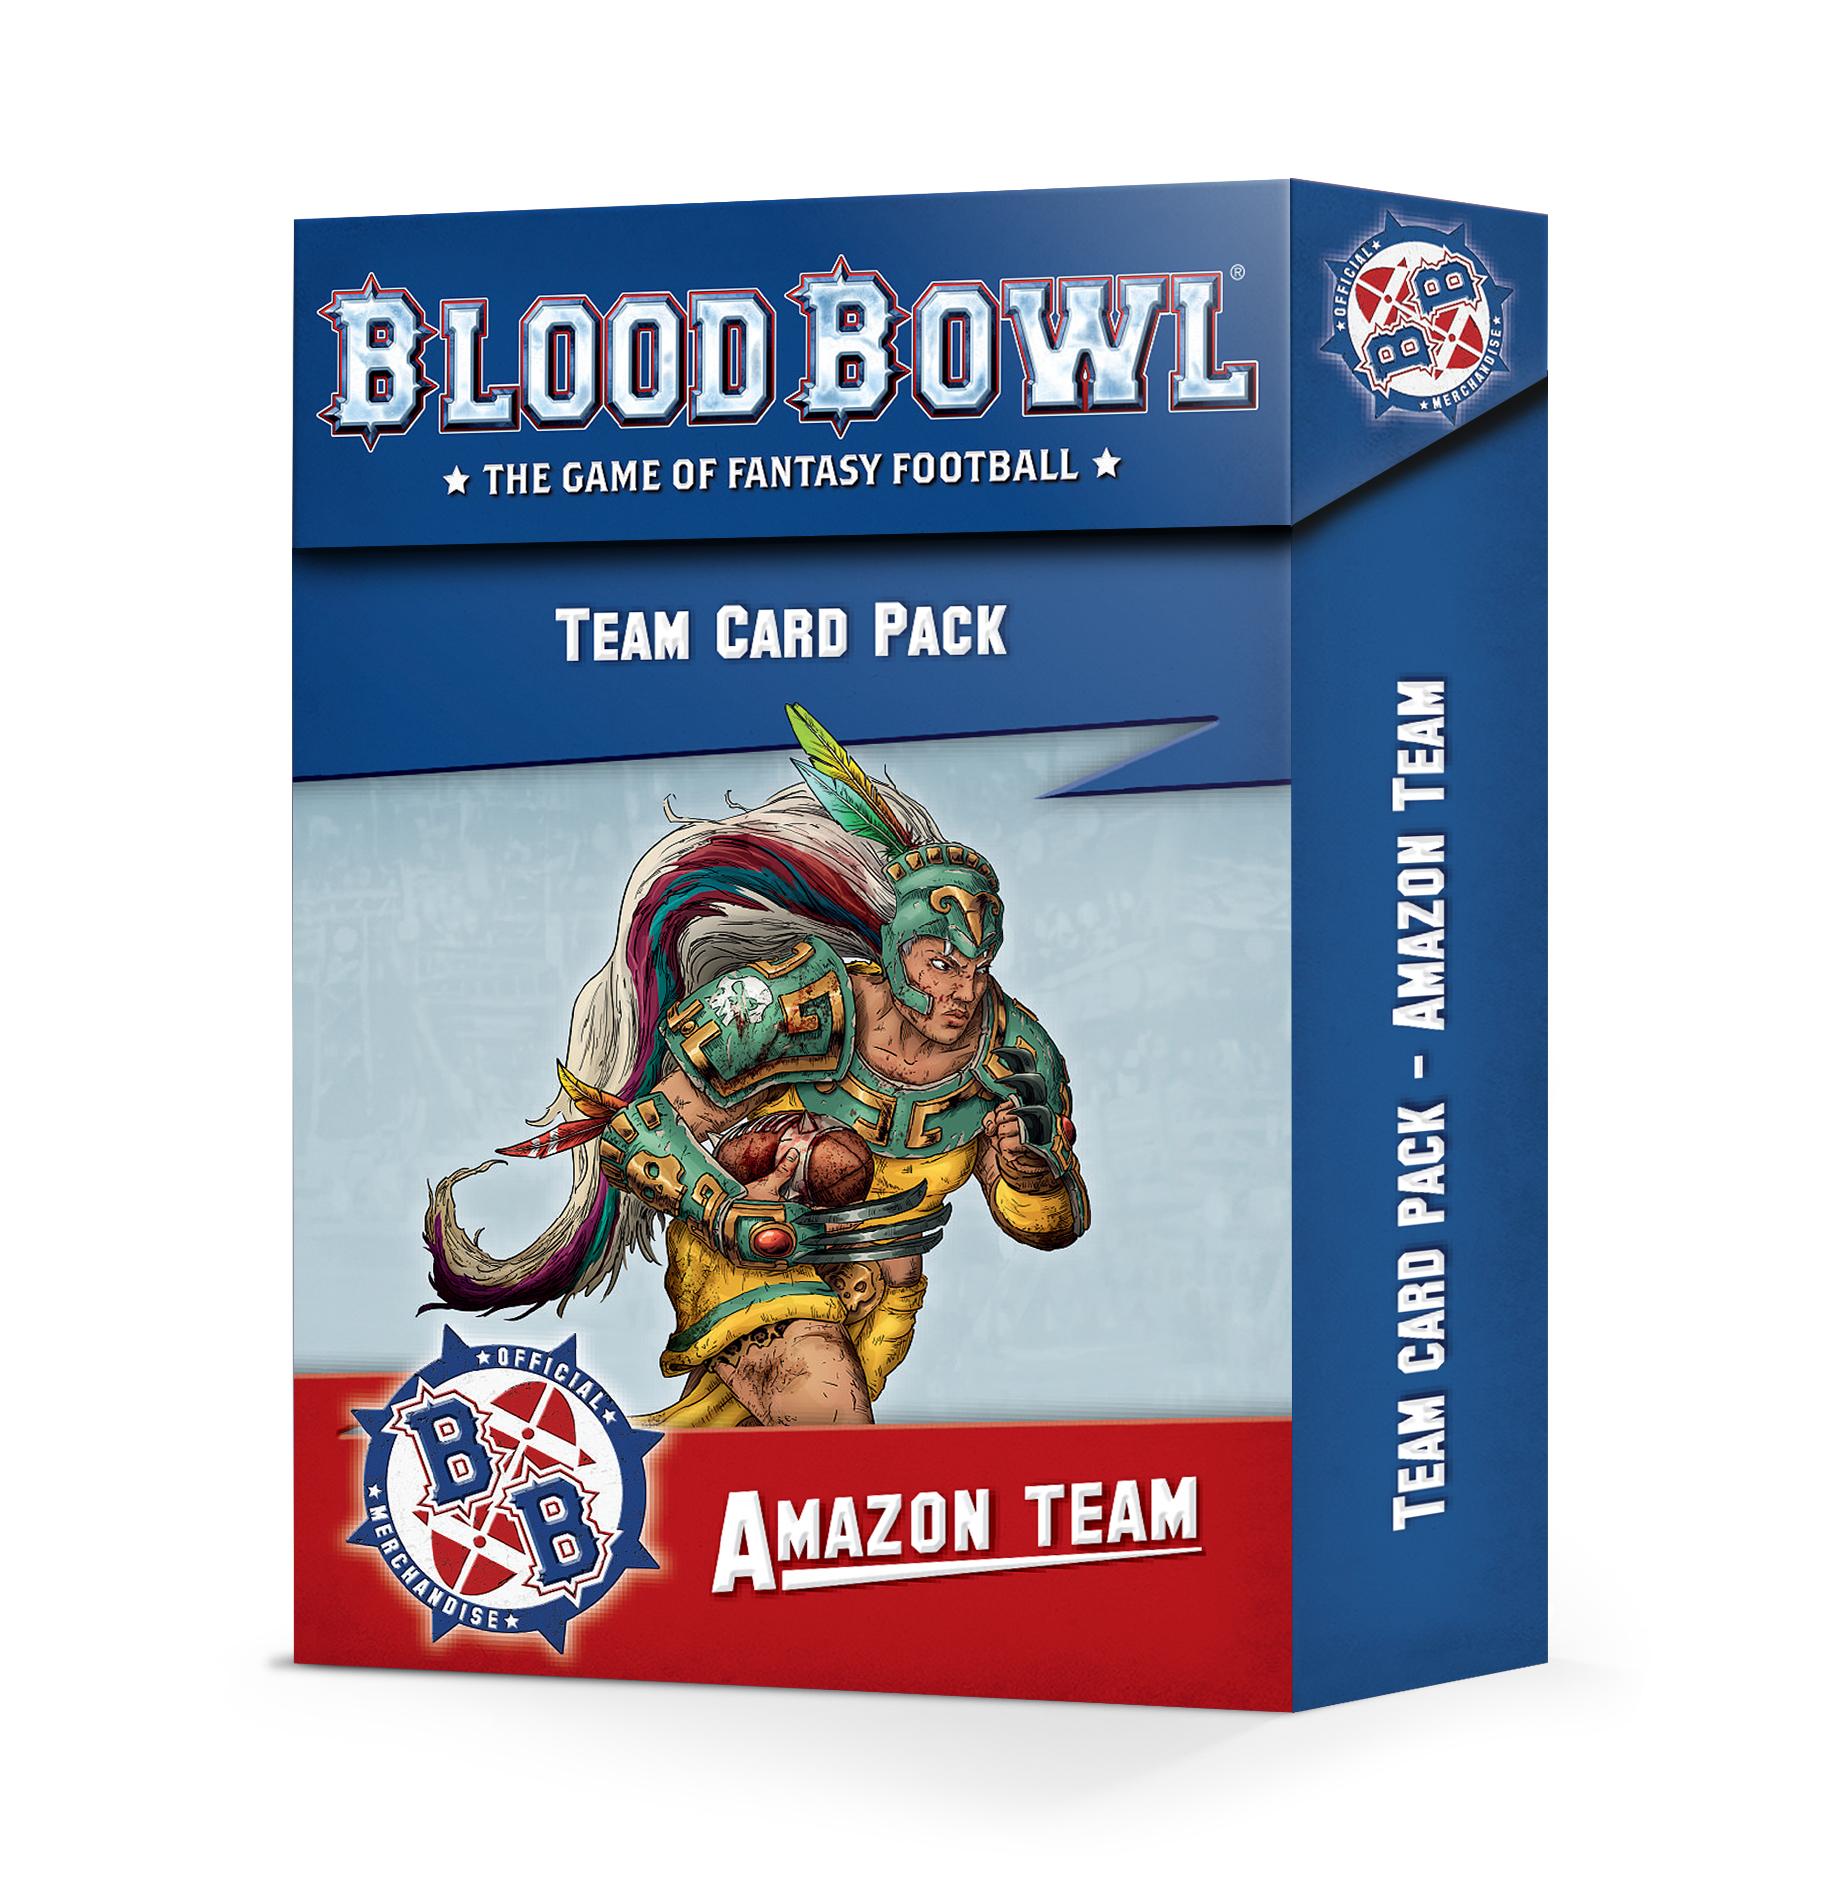 Blood Bowl - Team Card Pack: Amazon Team